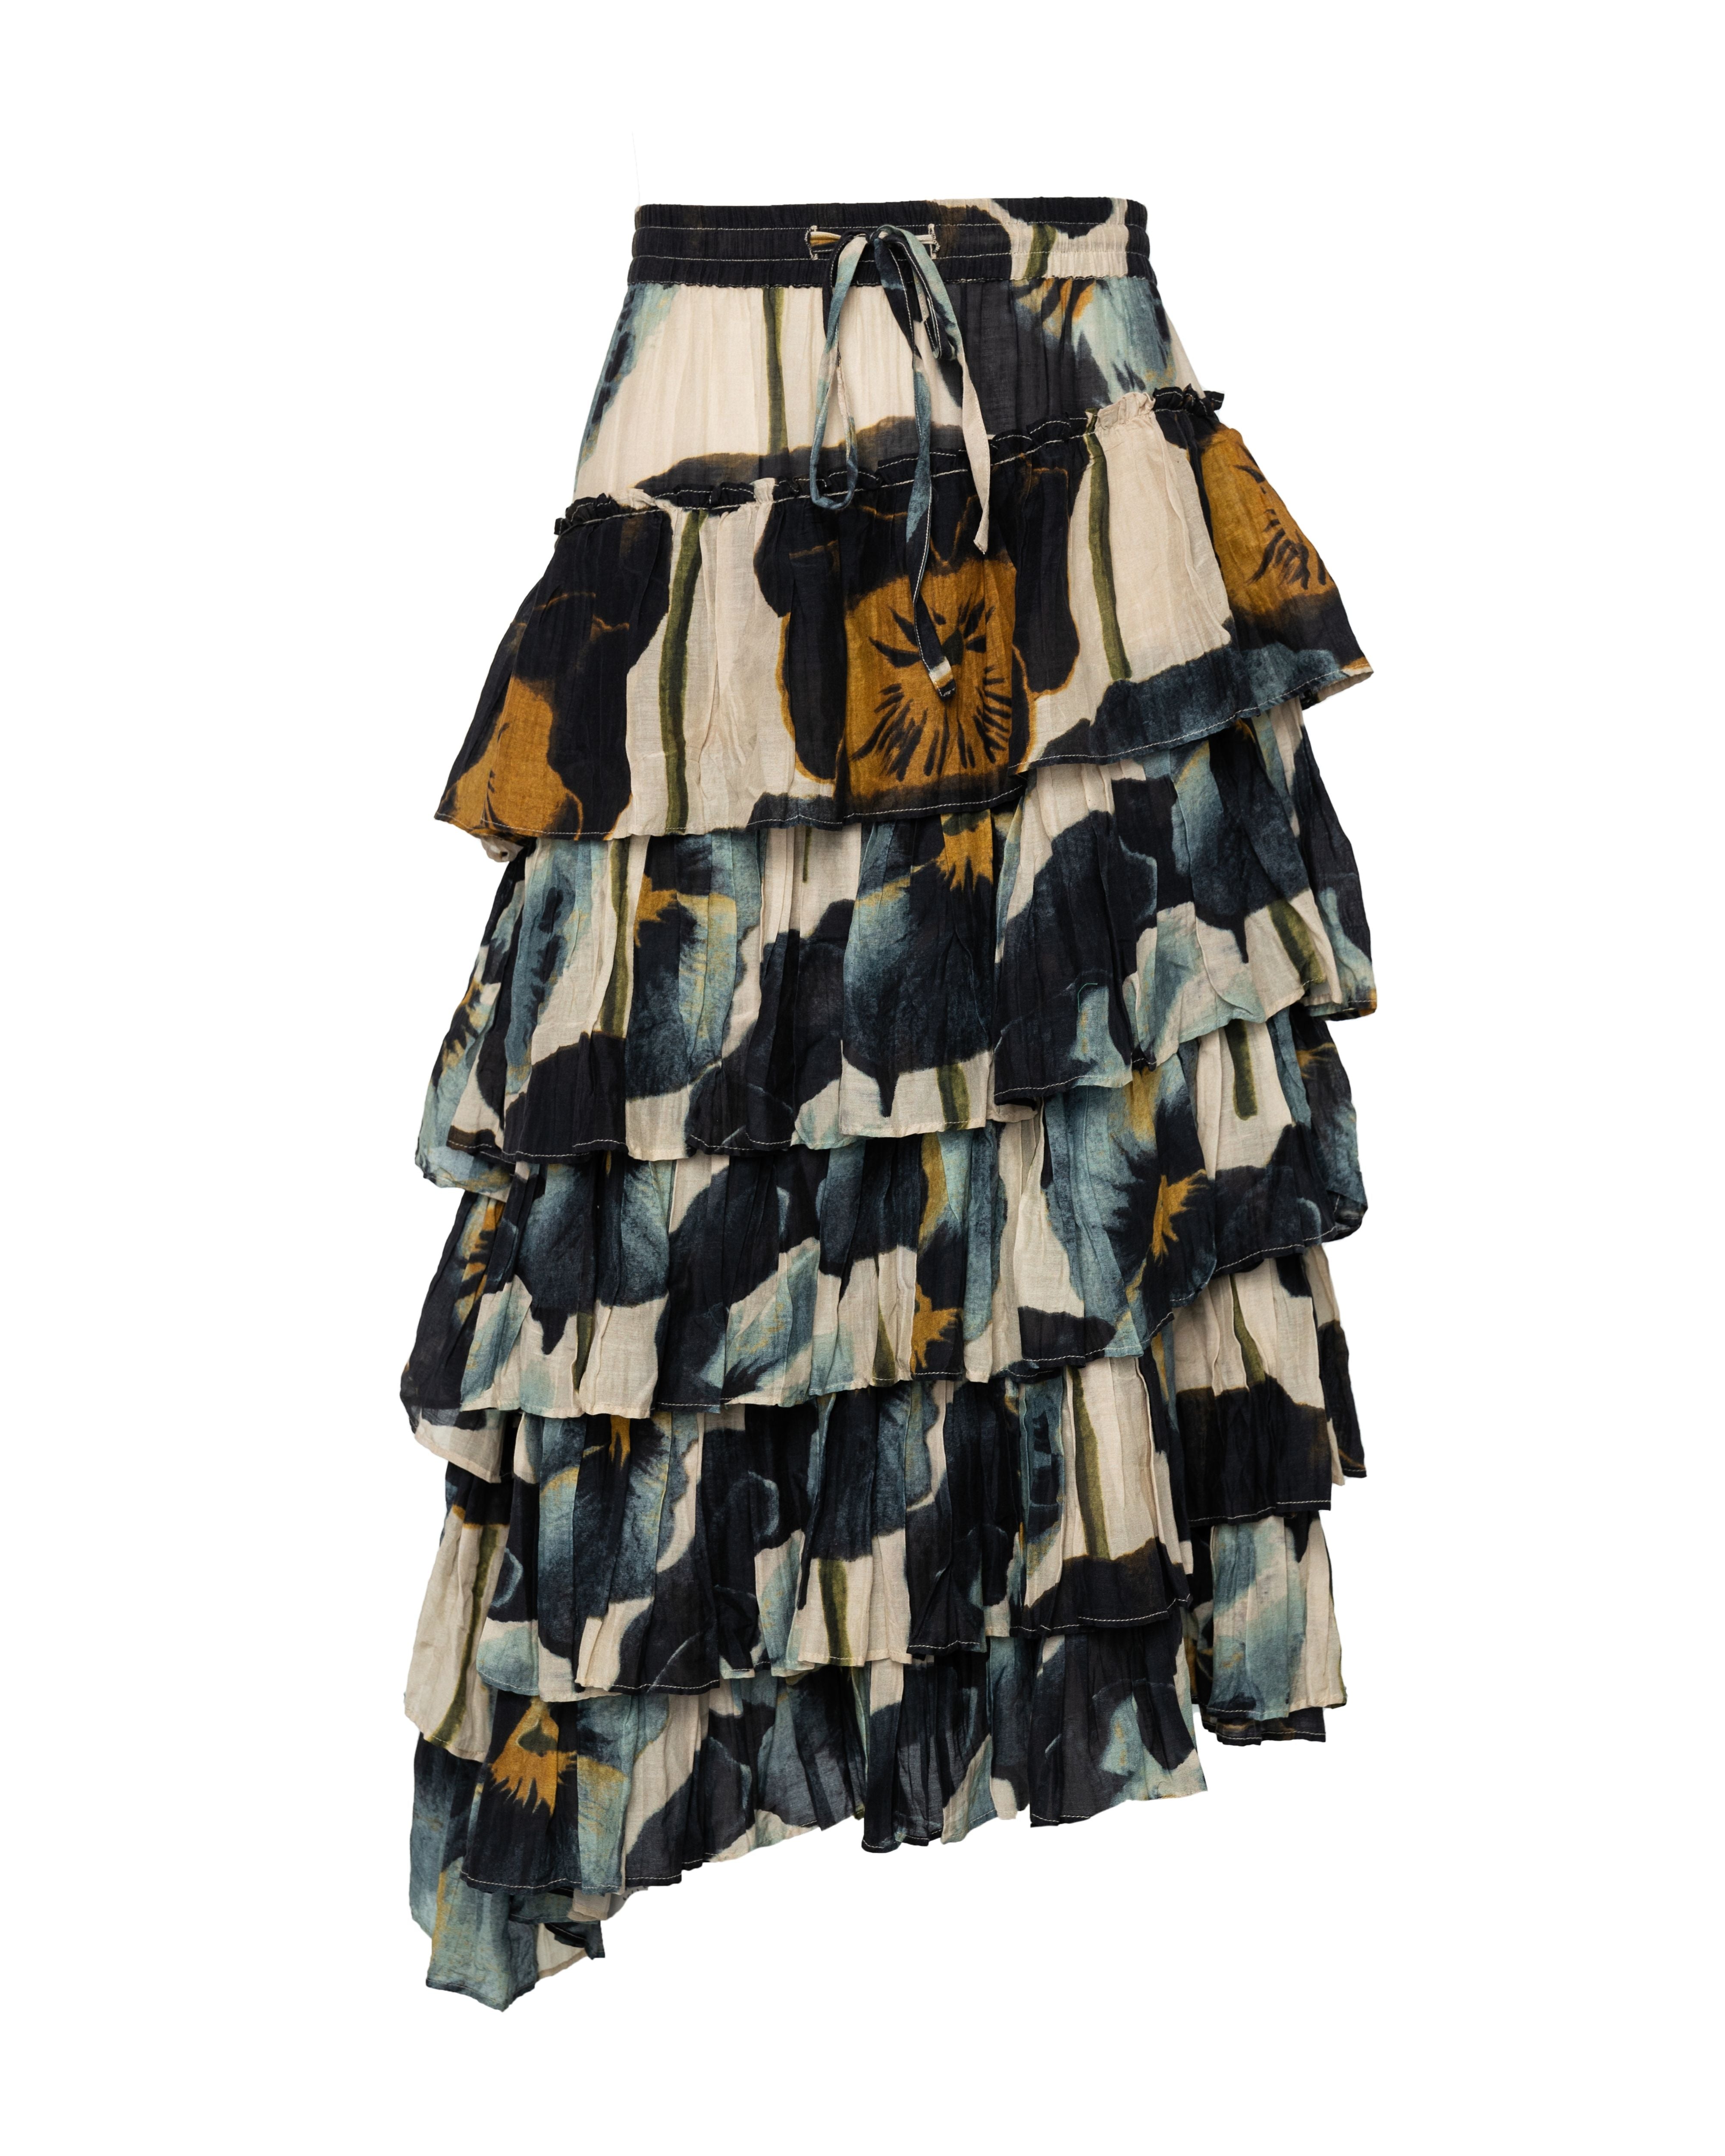 Cleo Skirt by Desert Queen